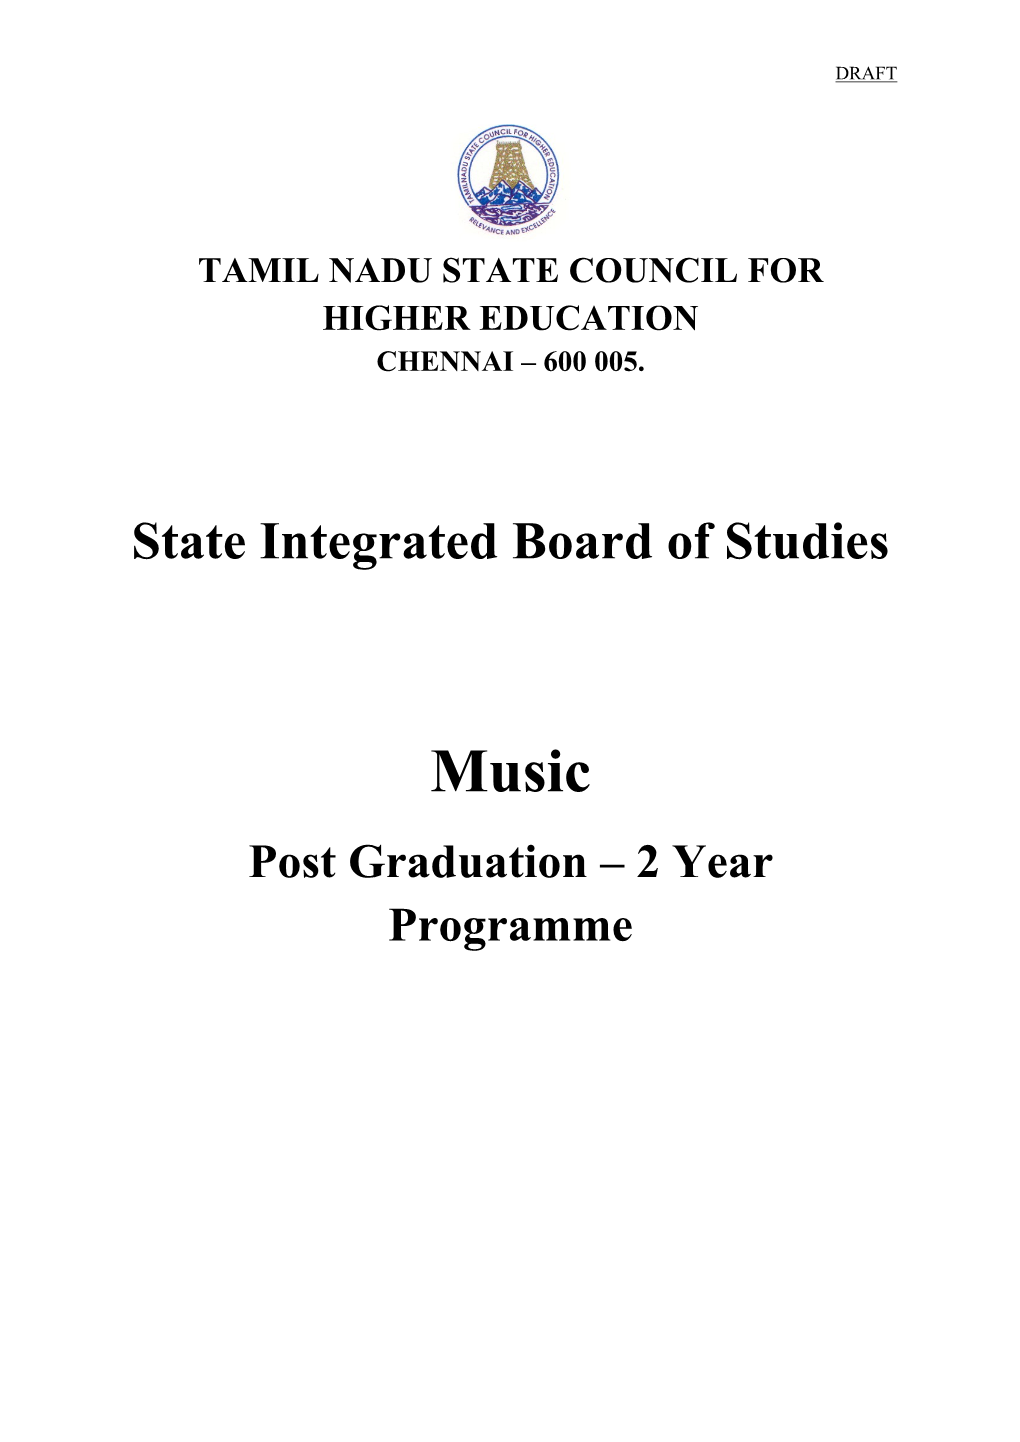 Music Post Graduation – 2 Year Programme